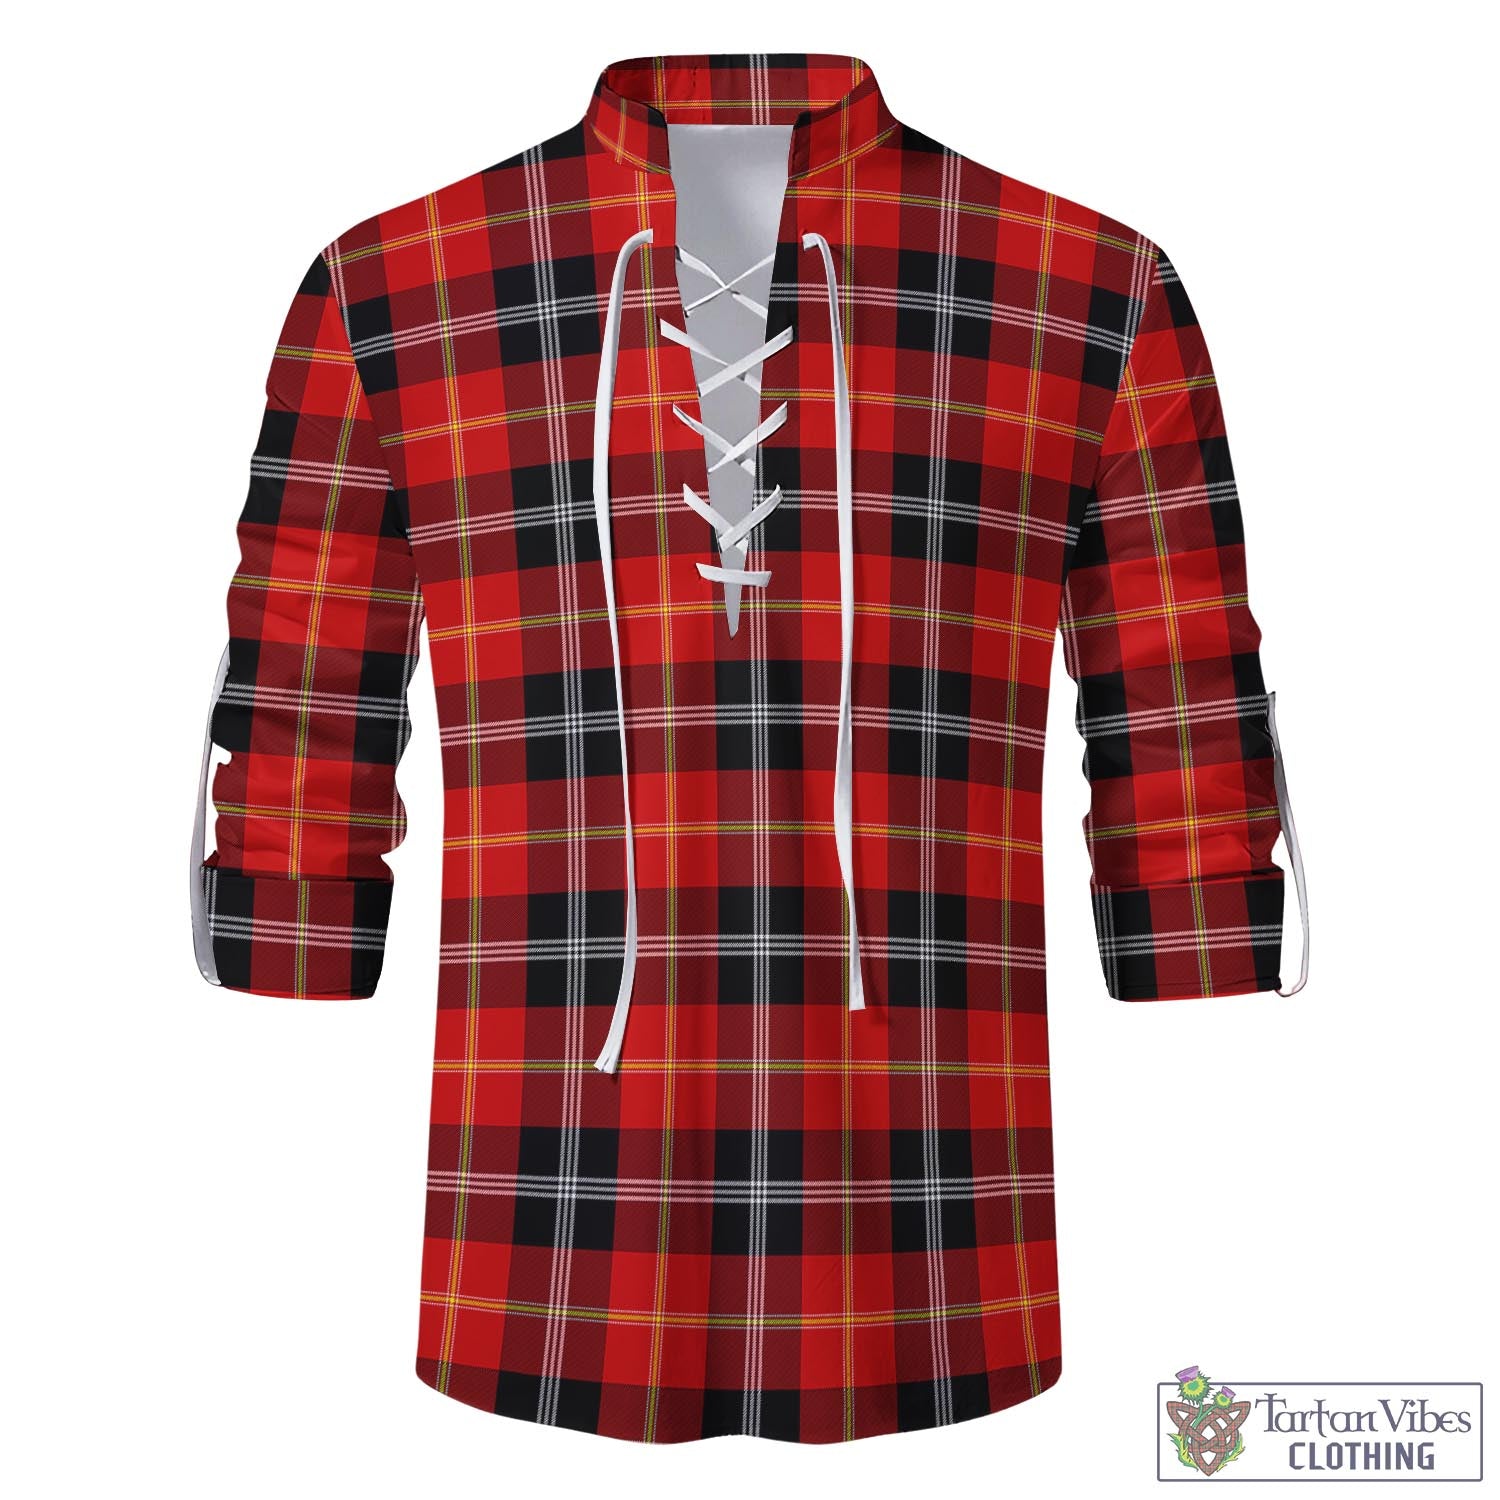 Tartan Vibes Clothing Majoribanks Tartan Men's Scottish Traditional Jacobite Ghillie Kilt Shirt